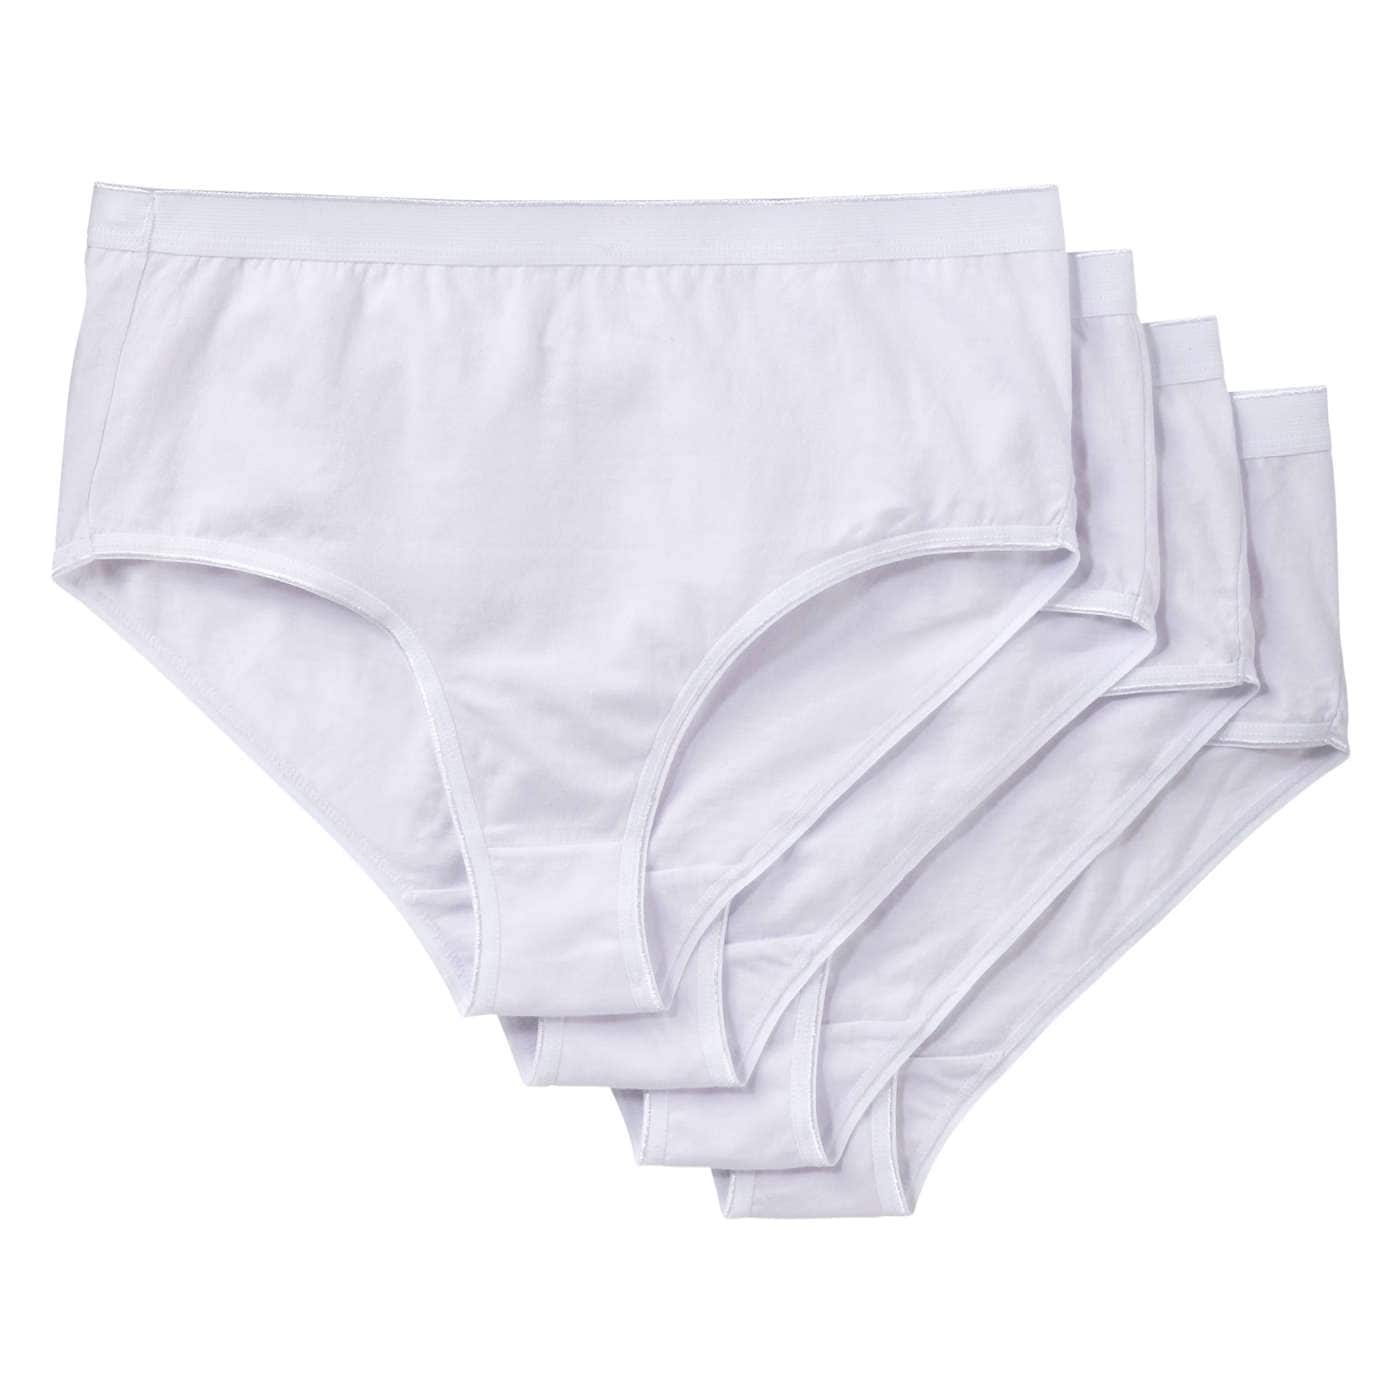 Buy VANILLAFUDGE Cotton Panties for Women's Prints and colors may